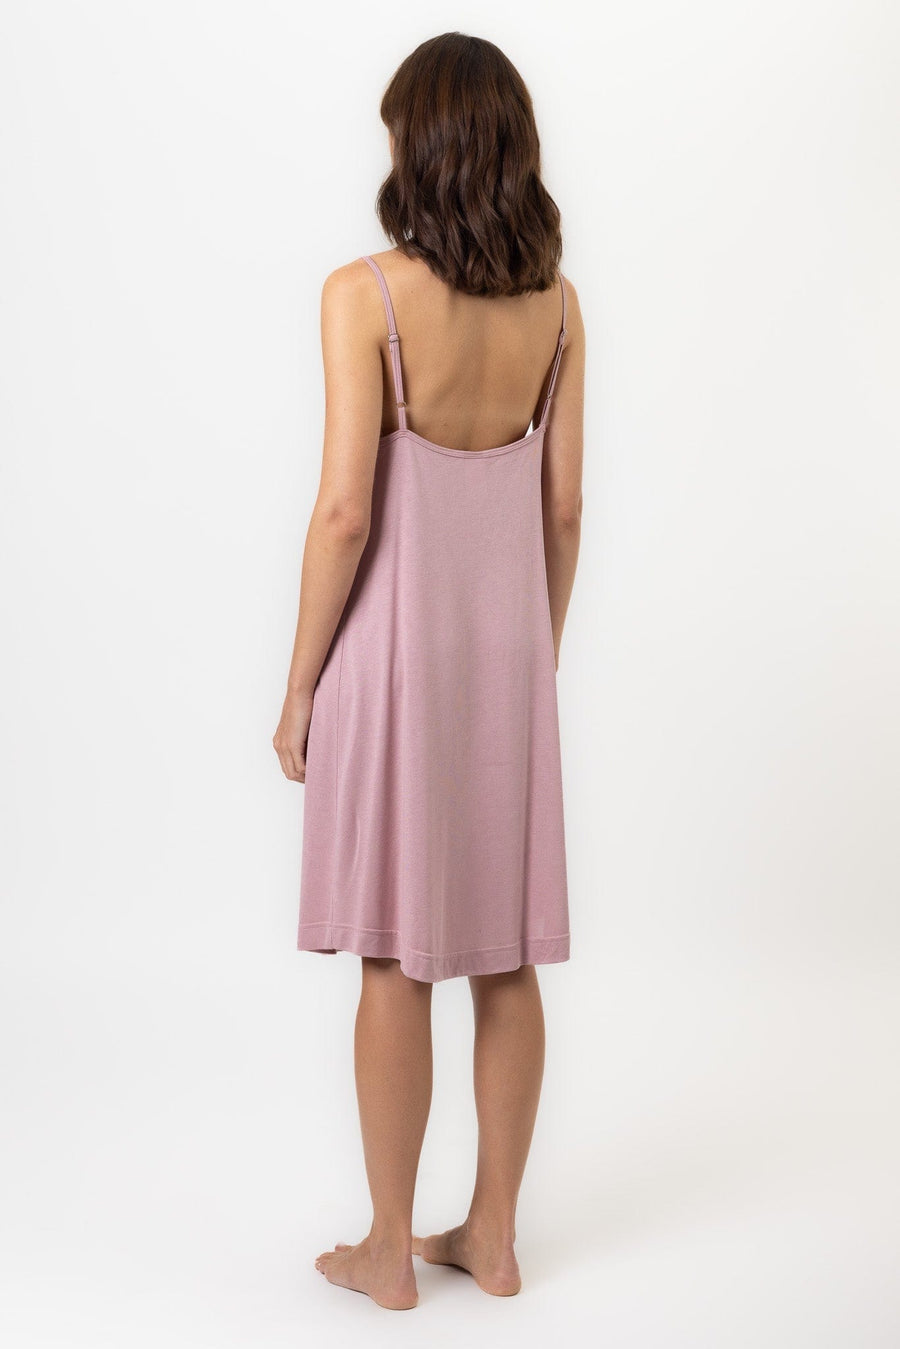 Sienna Night Dress| Blush Pink Sienna Nightdress Night Dresses Pajamas Australia Online | Reverie the Label  DRESS Sienna Nightdress